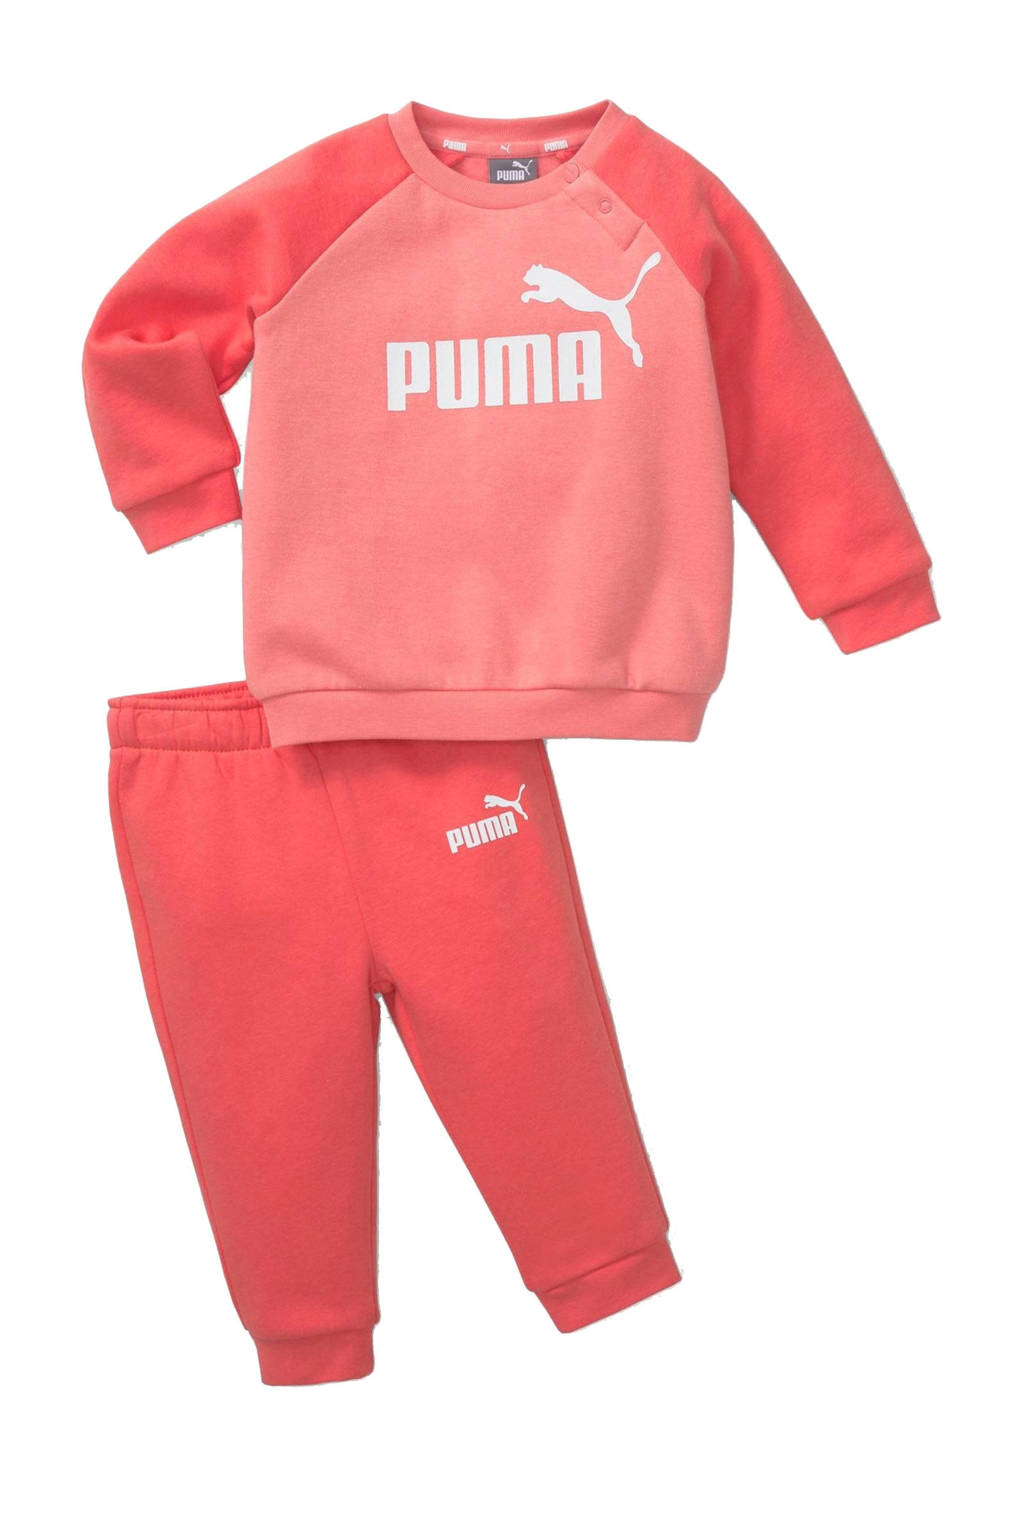 Puma joggingpak roze